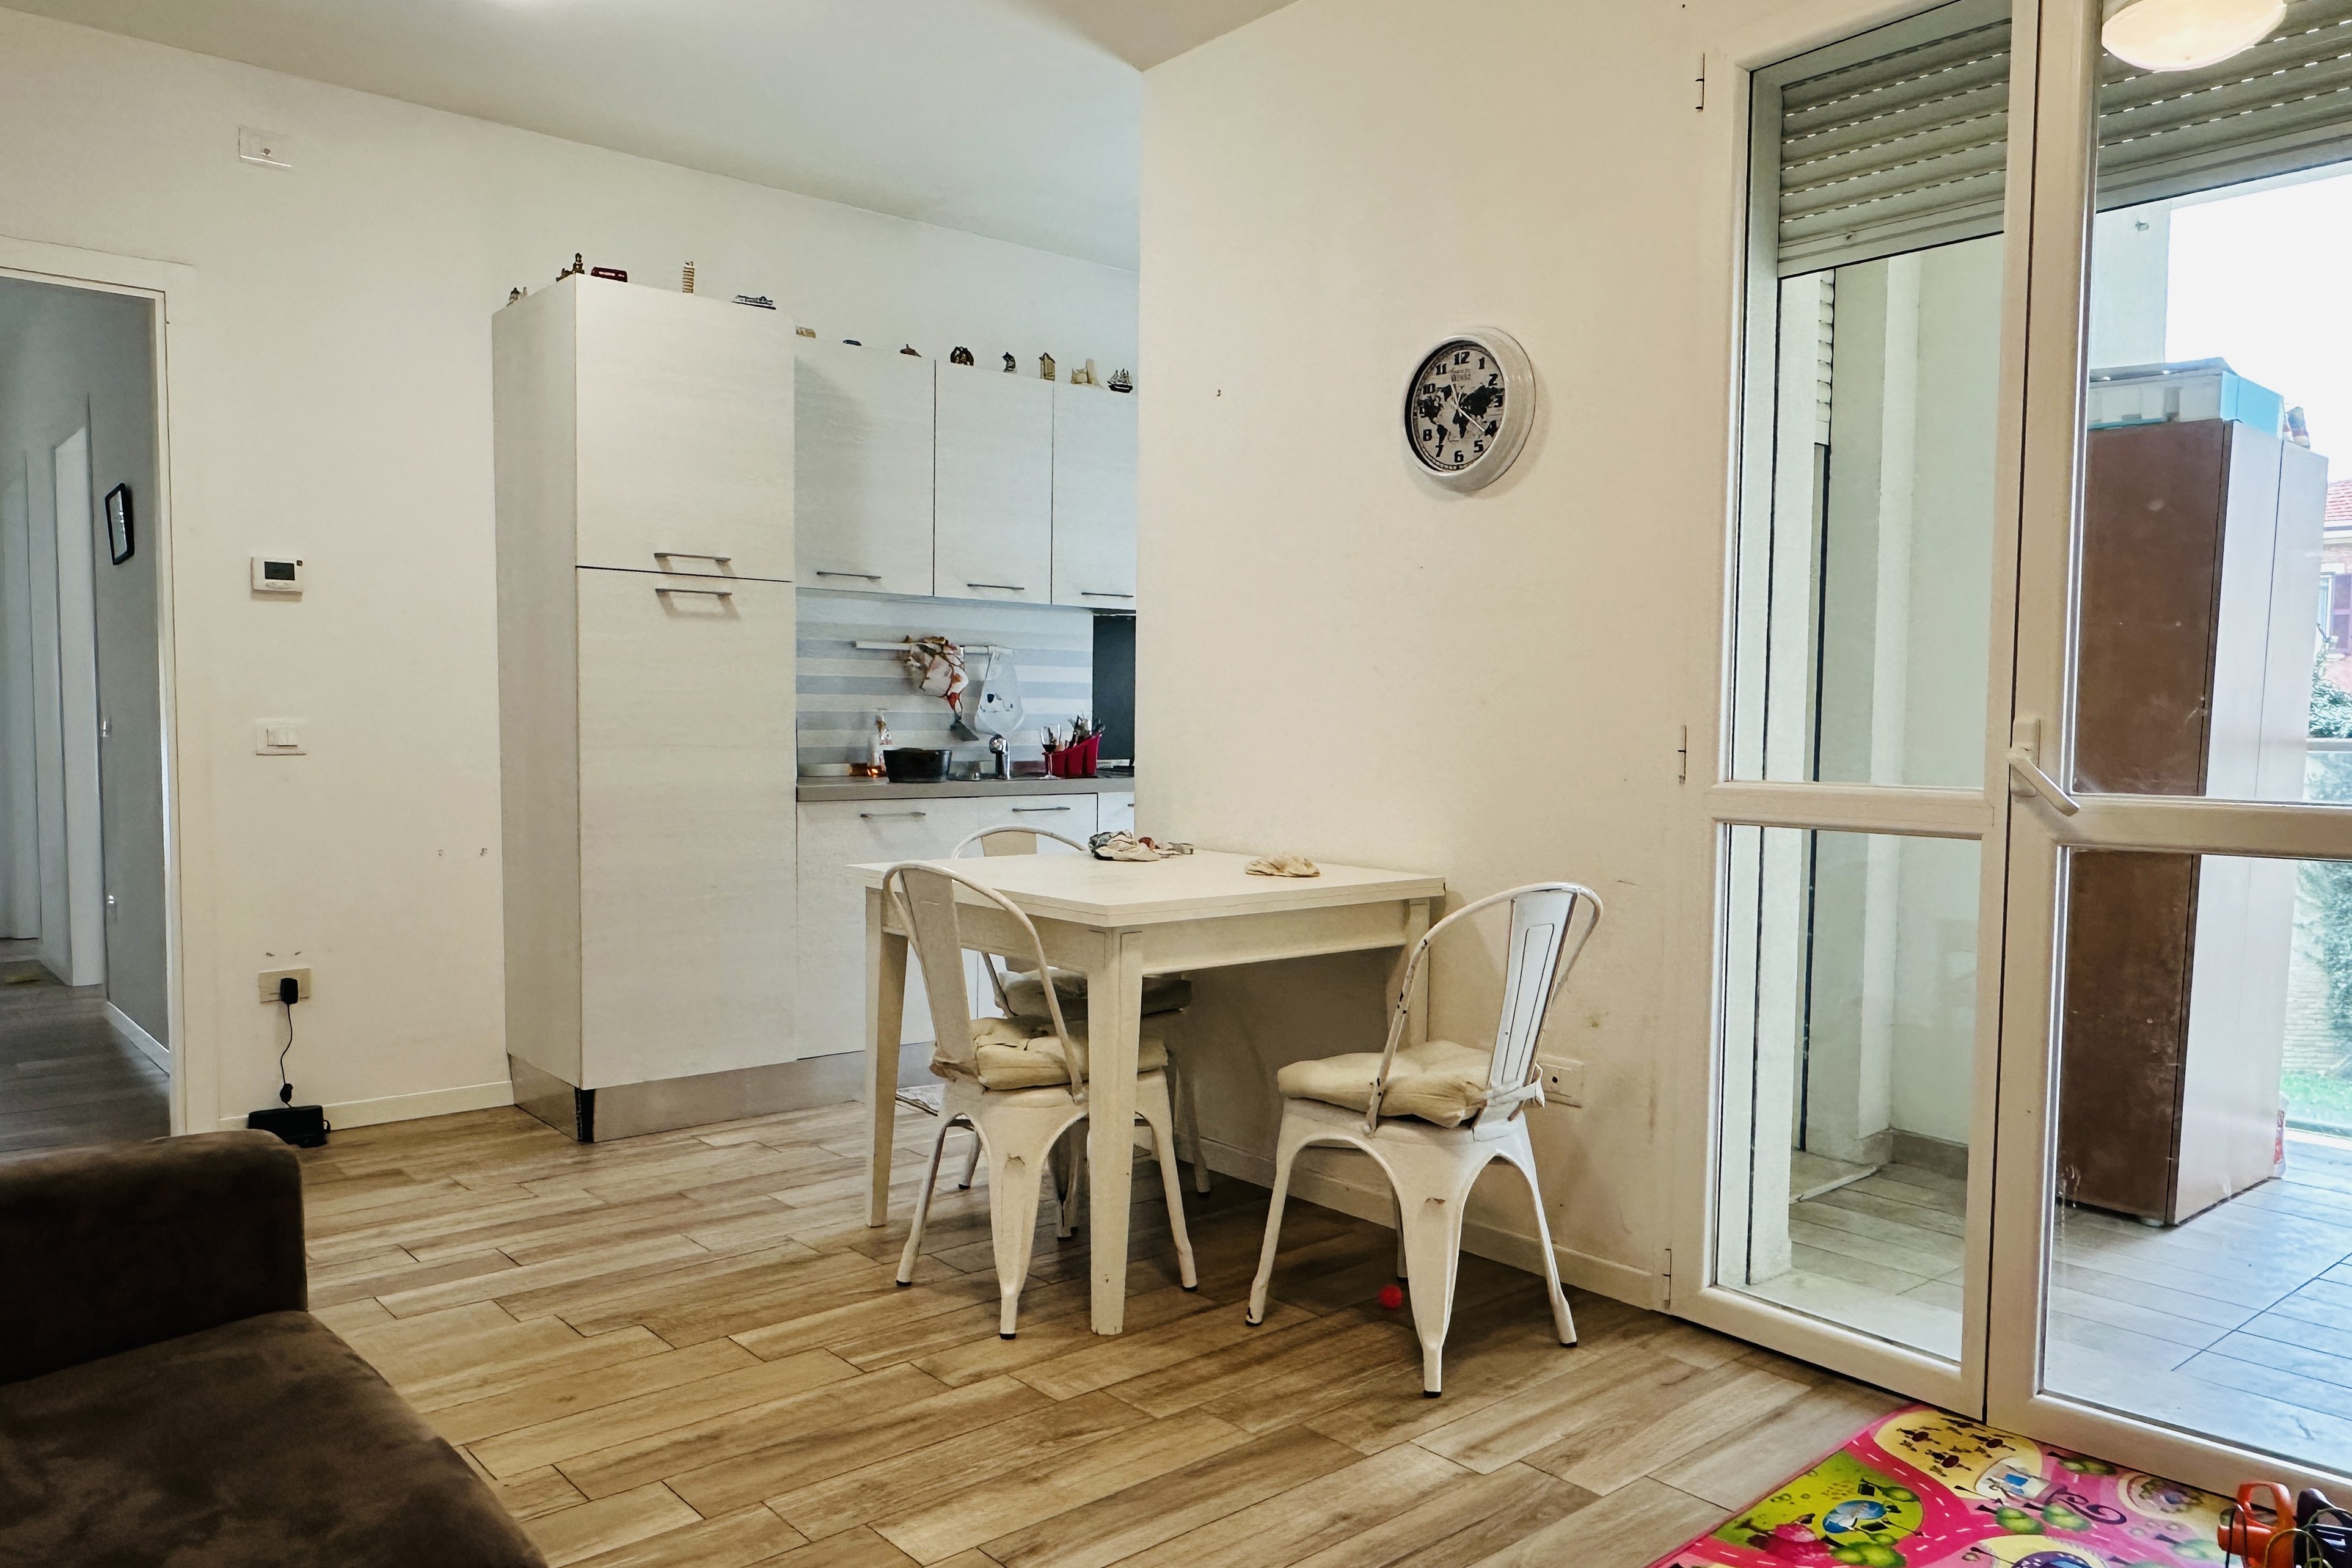 Recente appartamento Pesaro - Zona centro-mare (AP821)